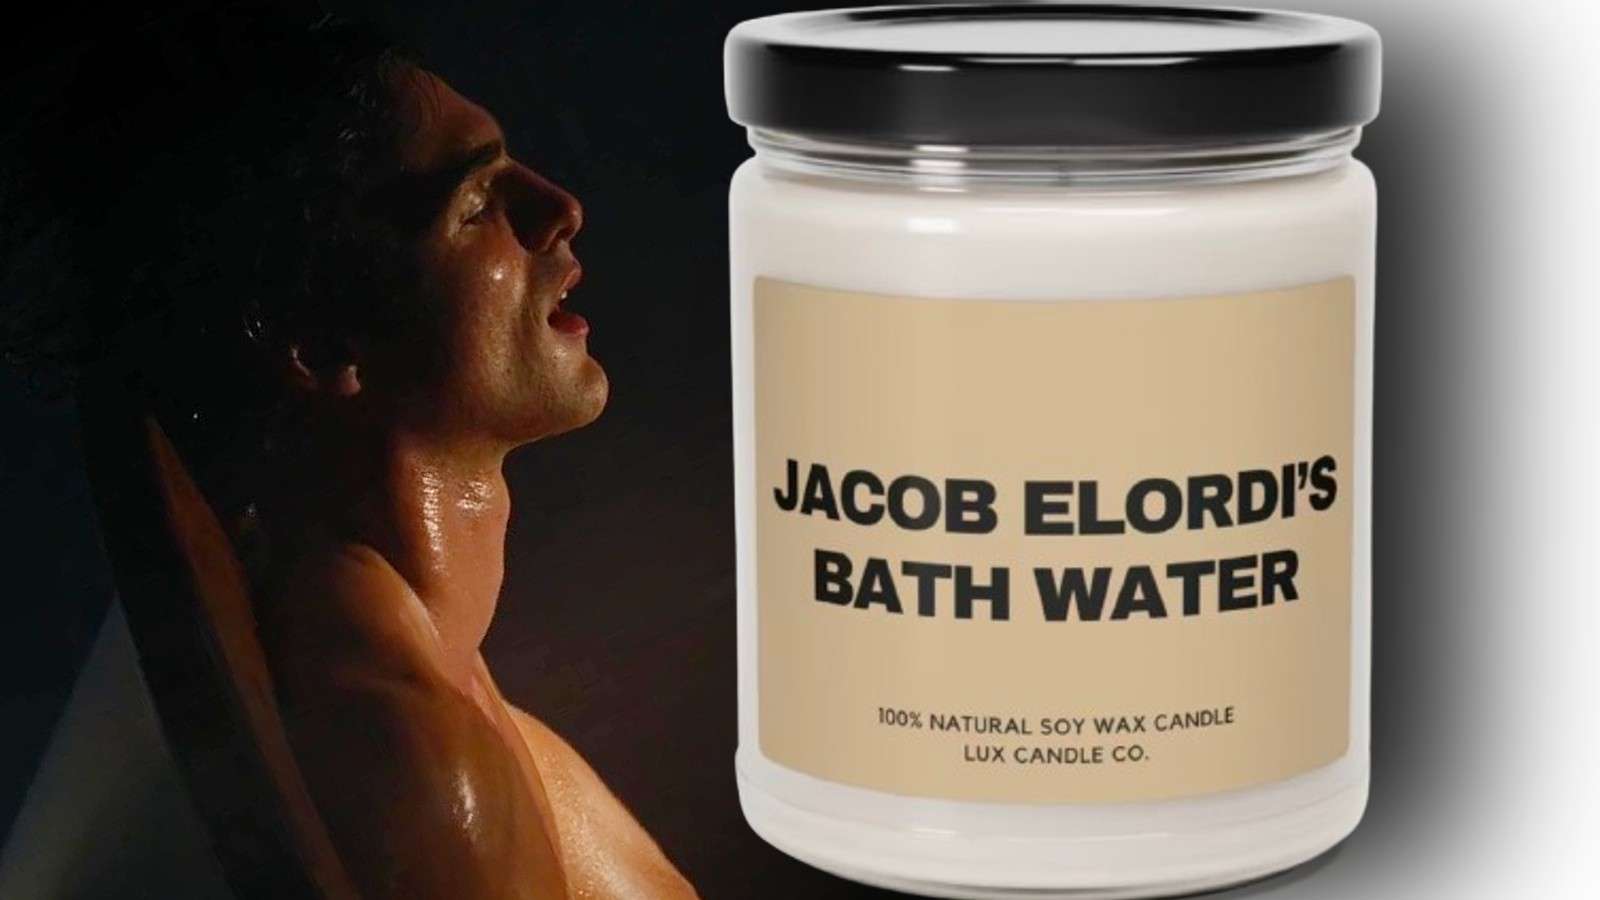 Jacob Elordi's bath scene in Saltburn and the bathwater candle